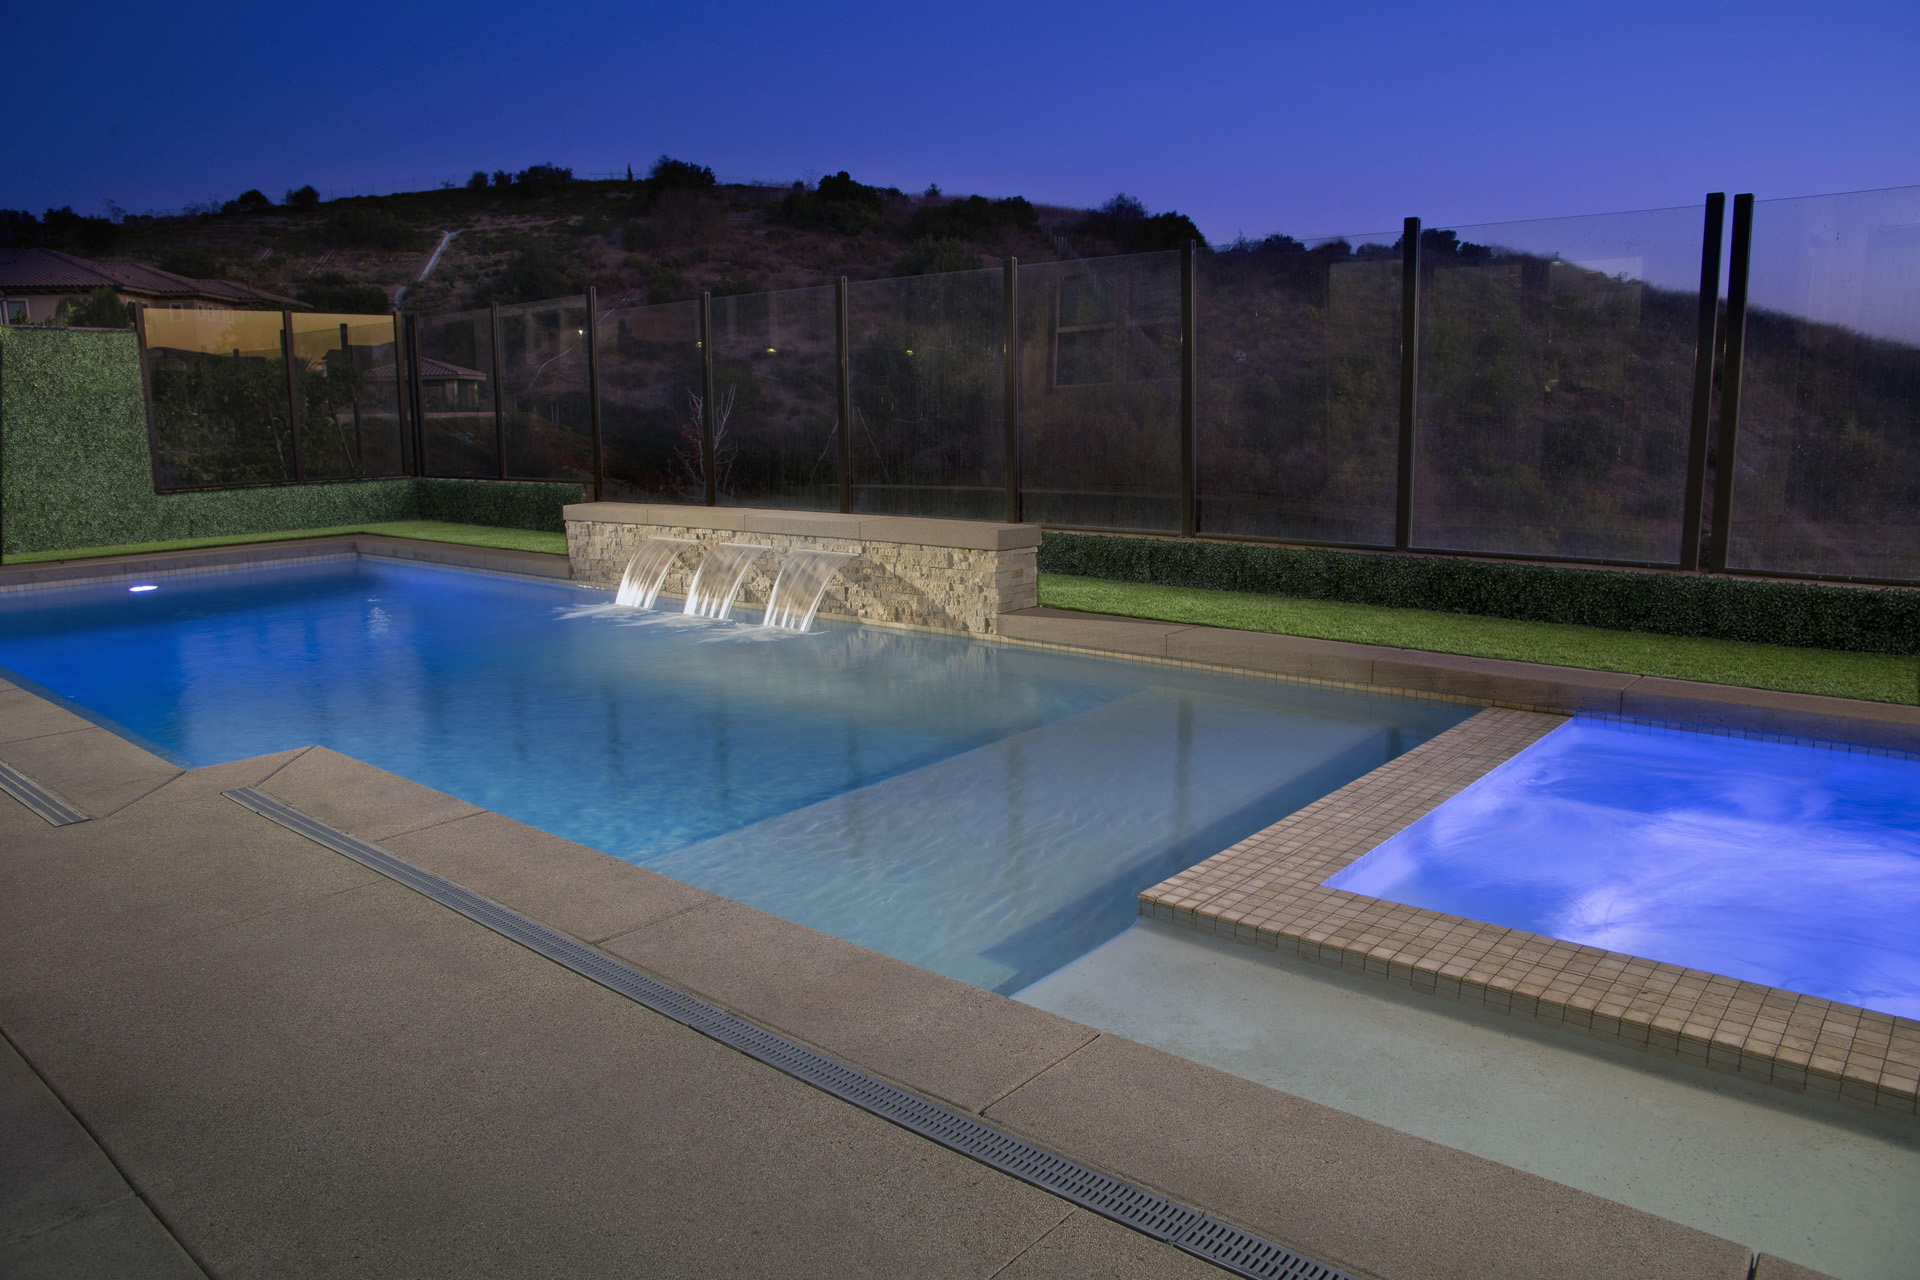 Swimming Pool Contractors designing stunning pools in Utah